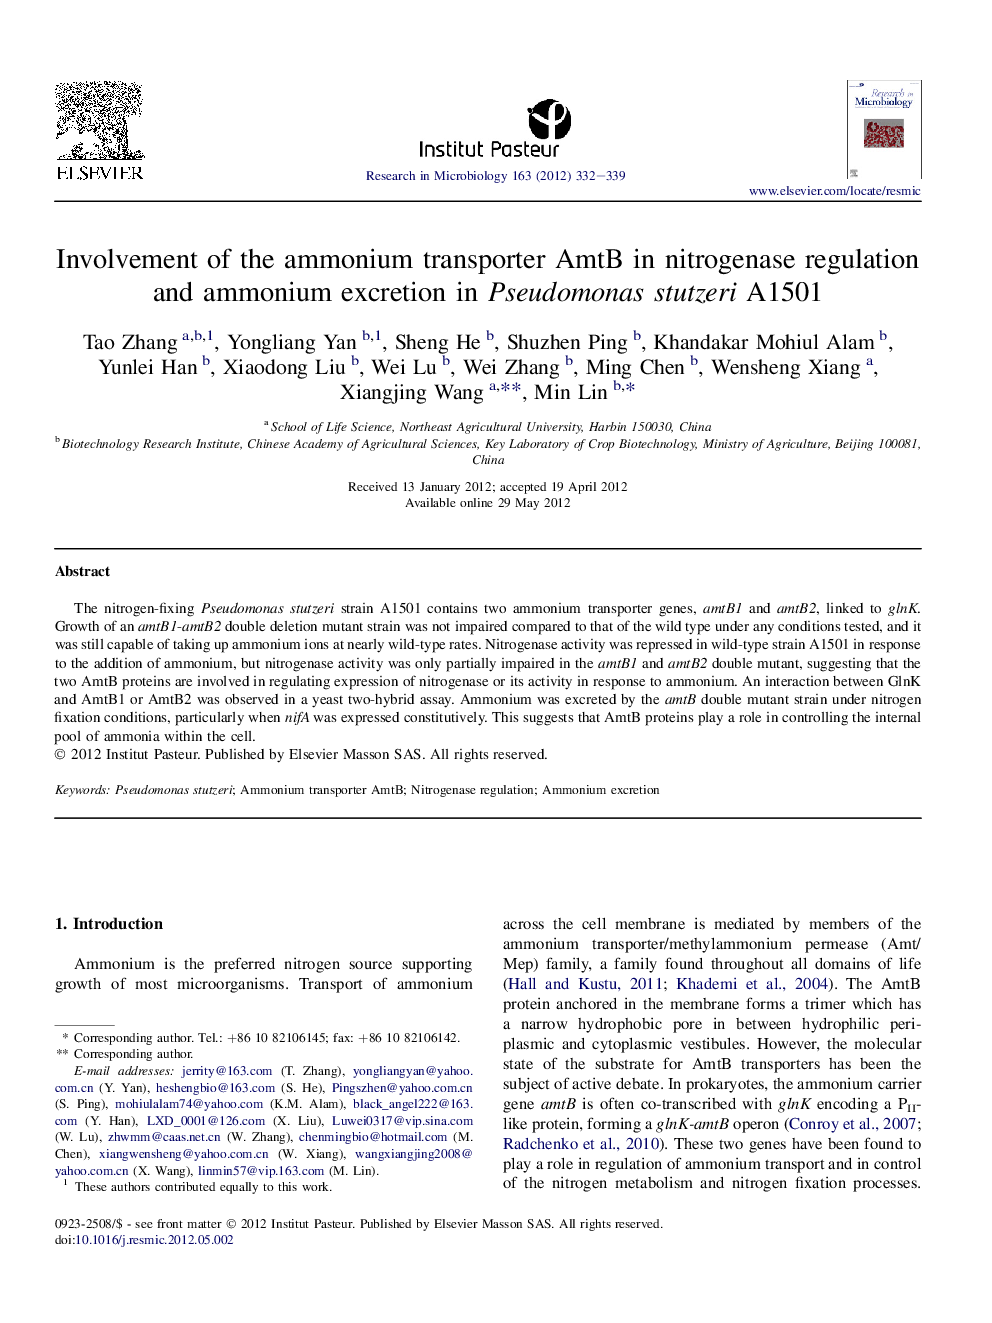 Involvement of the ammonium transporter AmtB in nitrogenase regulation and ammonium excretion in Pseudomonas stutzeri A1501